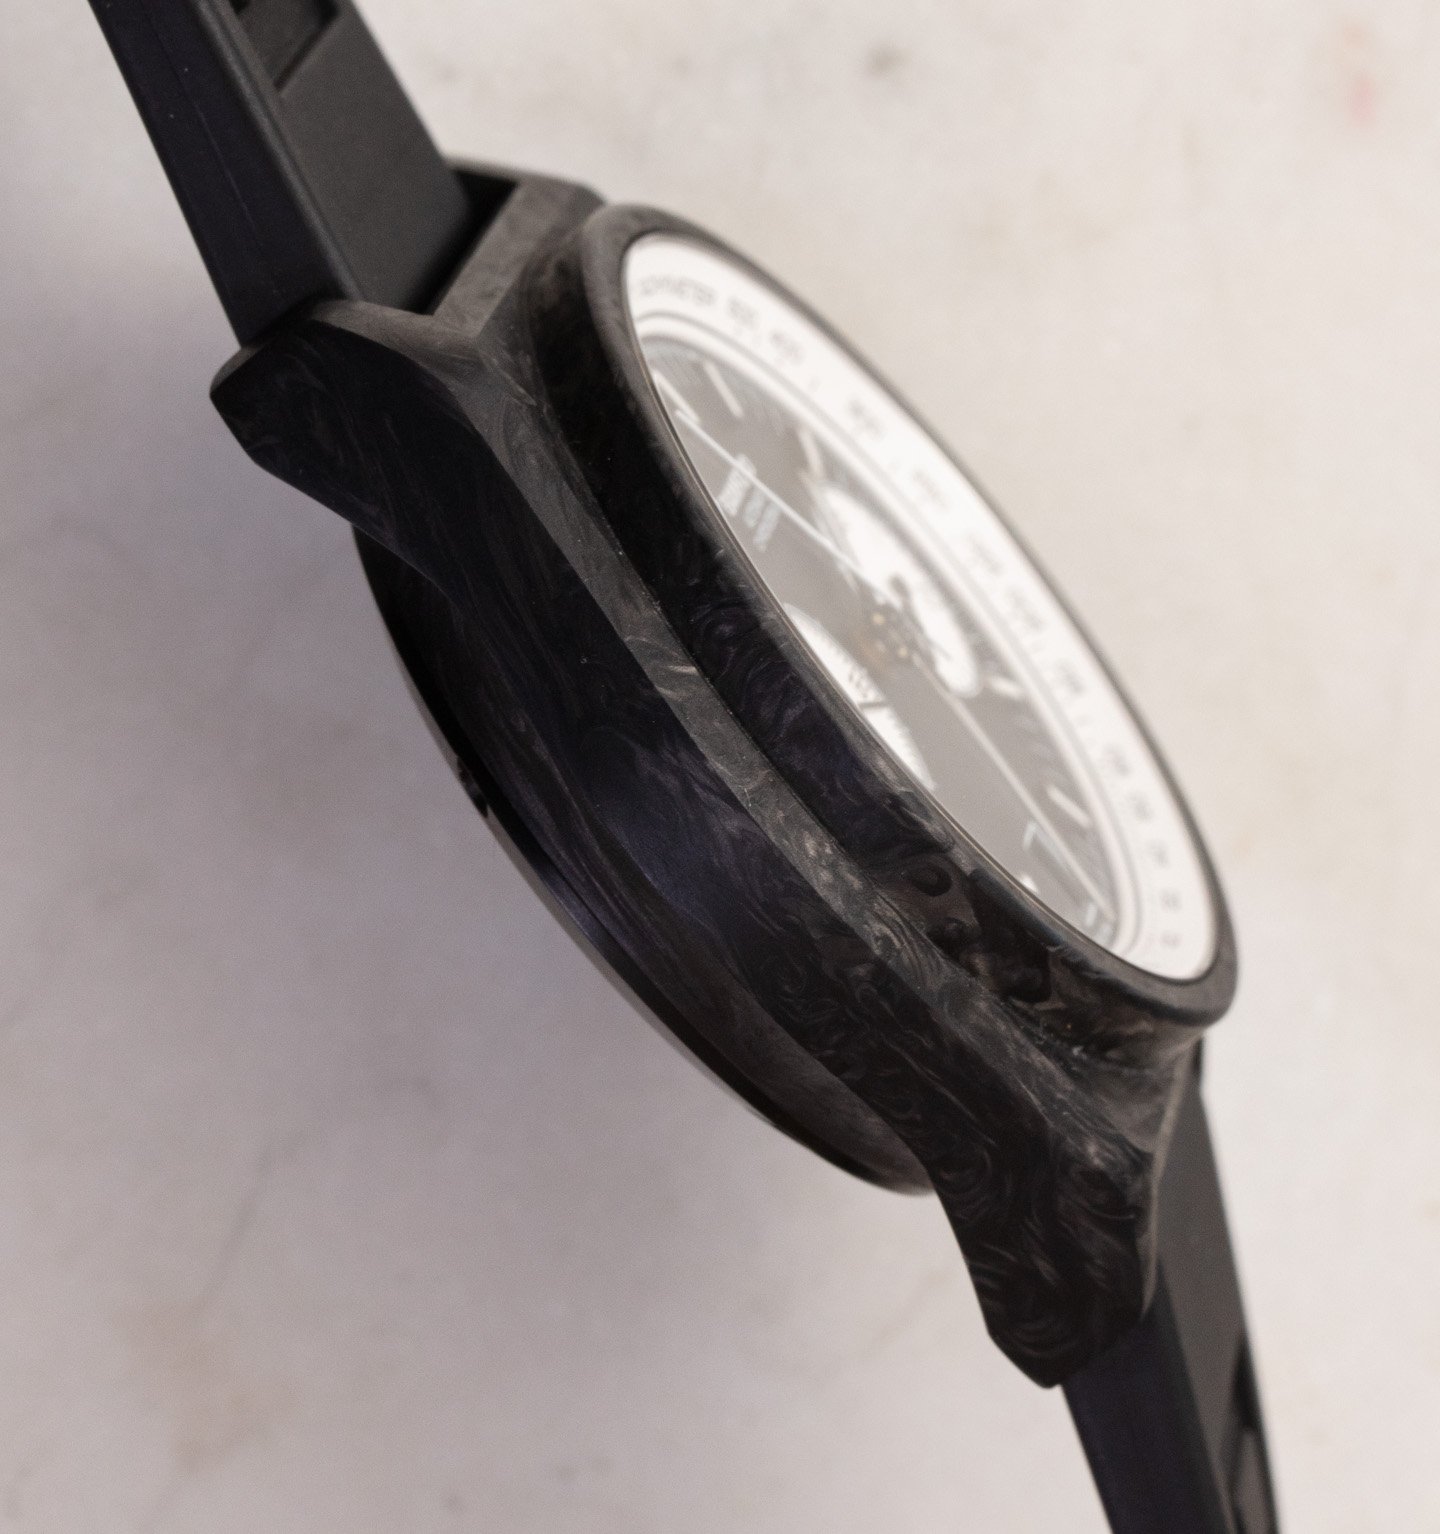 Обзор часов: Bamford B347 Automatic Monopusher Chronograph